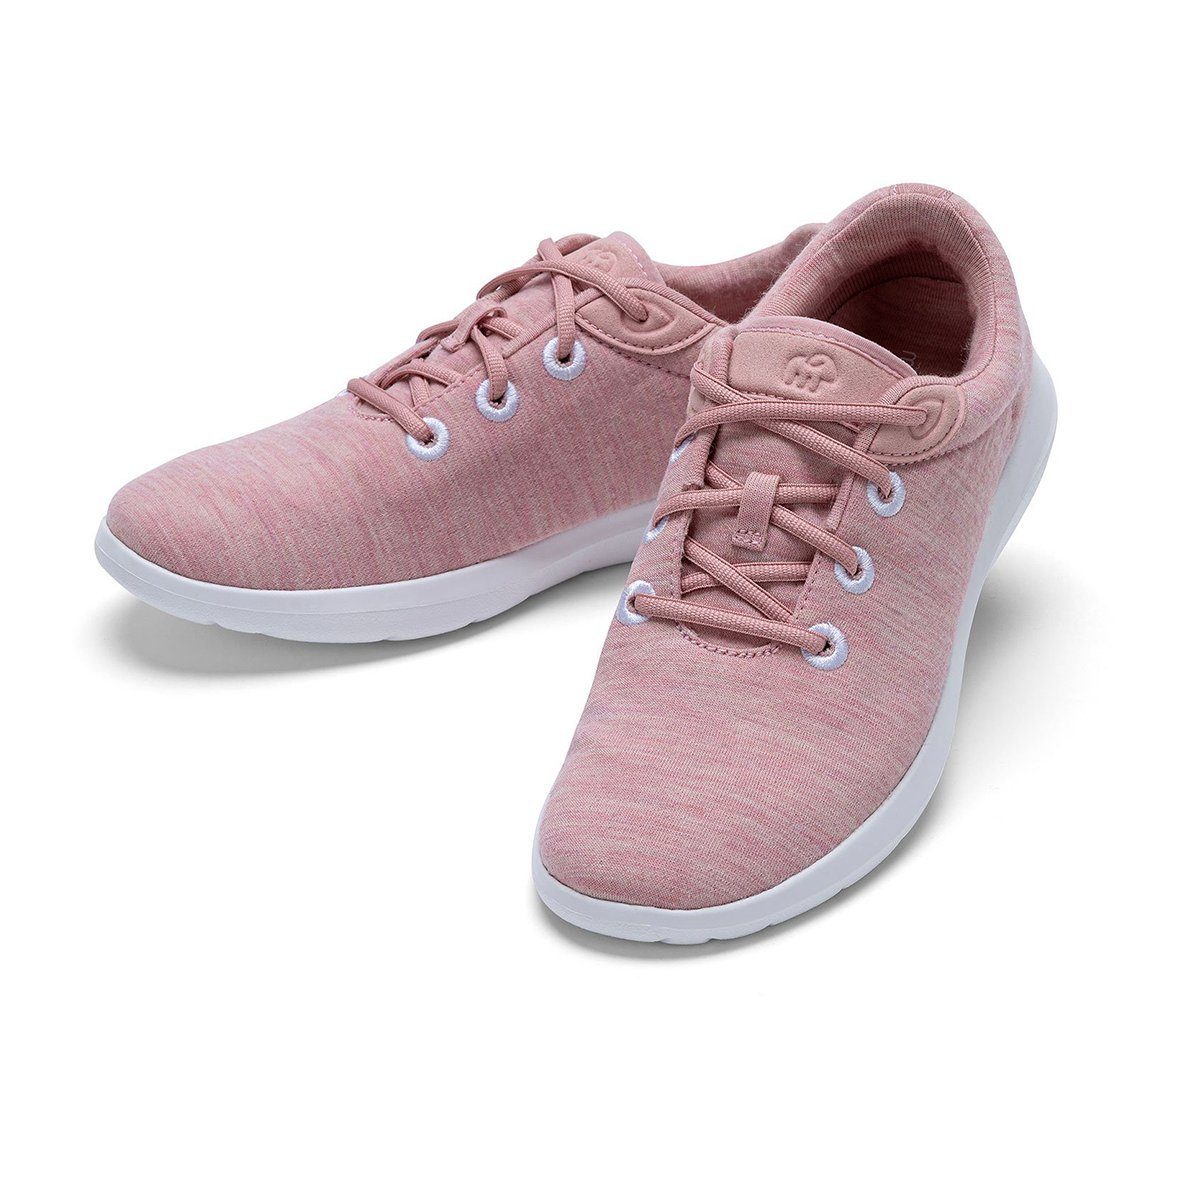 merinos - merinoshoes.de Bequeme Damen Lace- Up, Sportschuhe Sneaker atmungsaktive rosa Schuhe aus weicher Merinowolle | Sneaker low